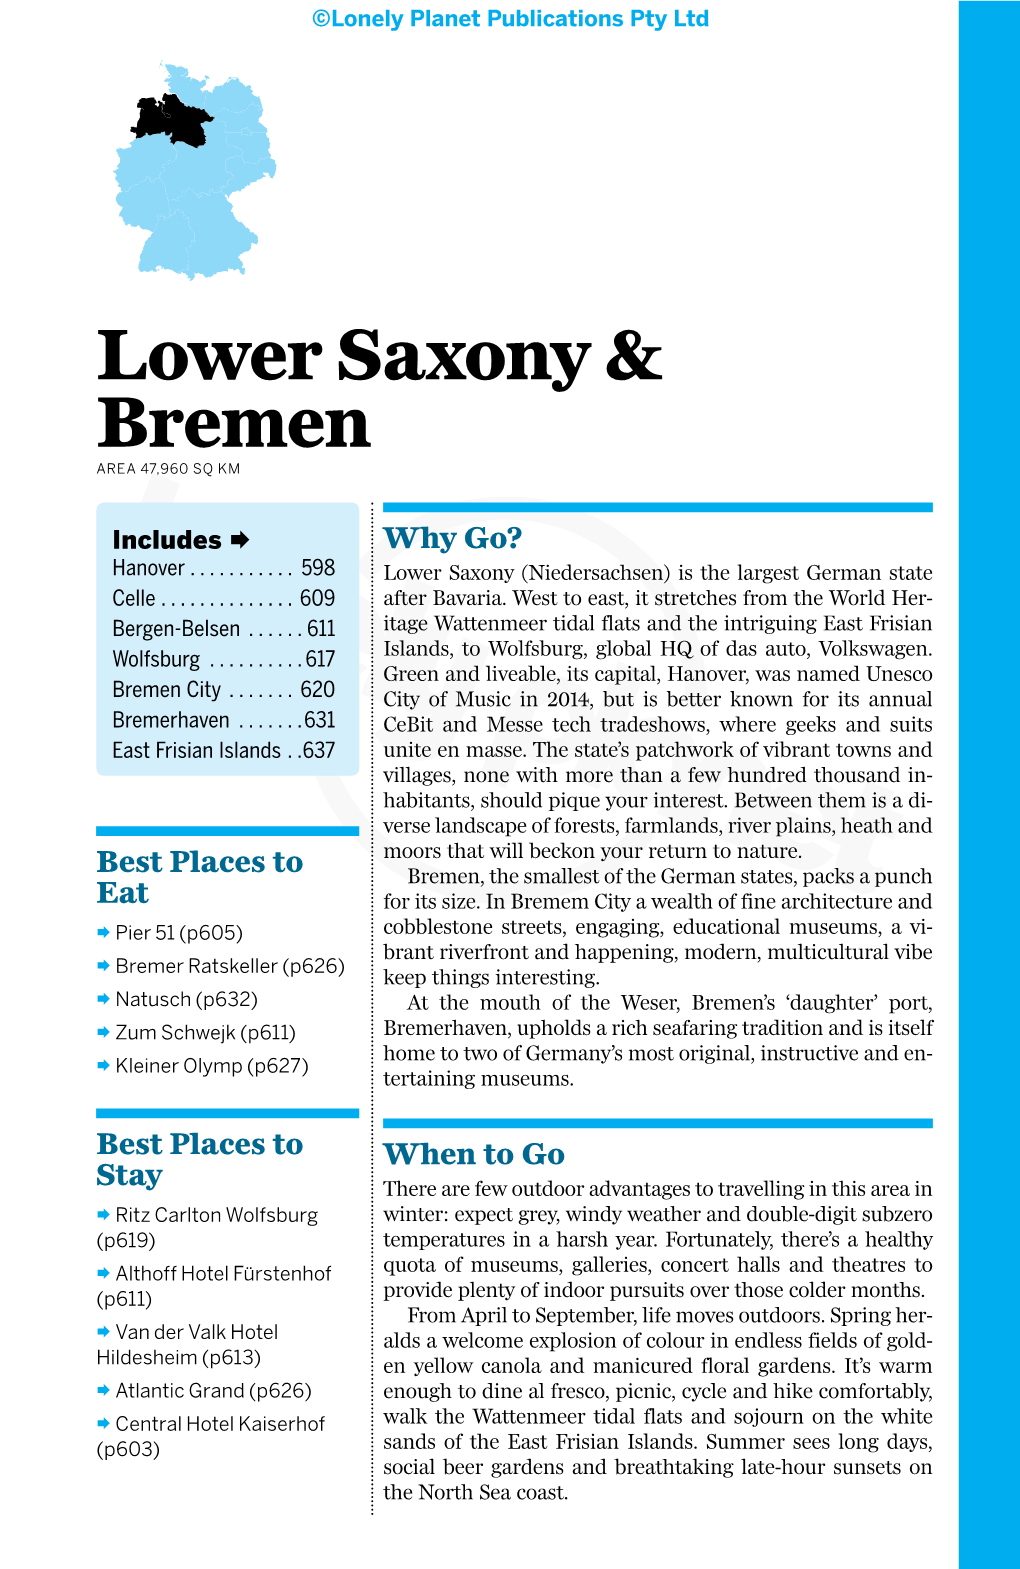 Lower Saxony & Bremen